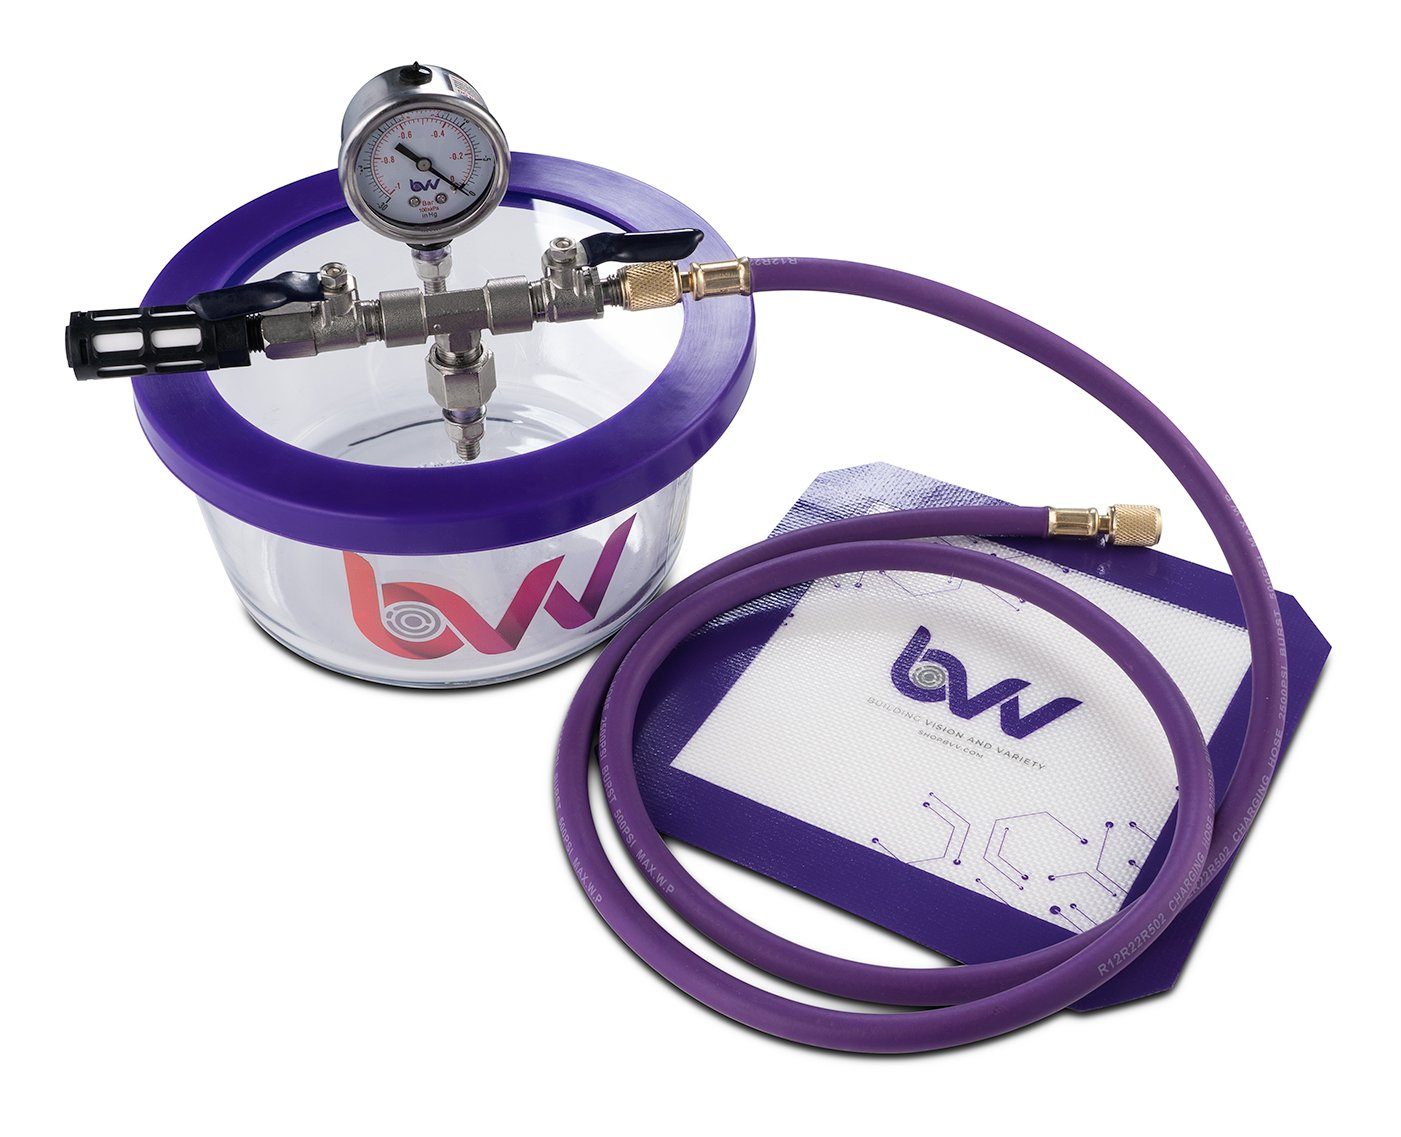 BVV 1.75 Pyrex Vacuum Chamber and VE115 3CFM Single Stage Vacuum Pump Kit Shop All Categories BVV 